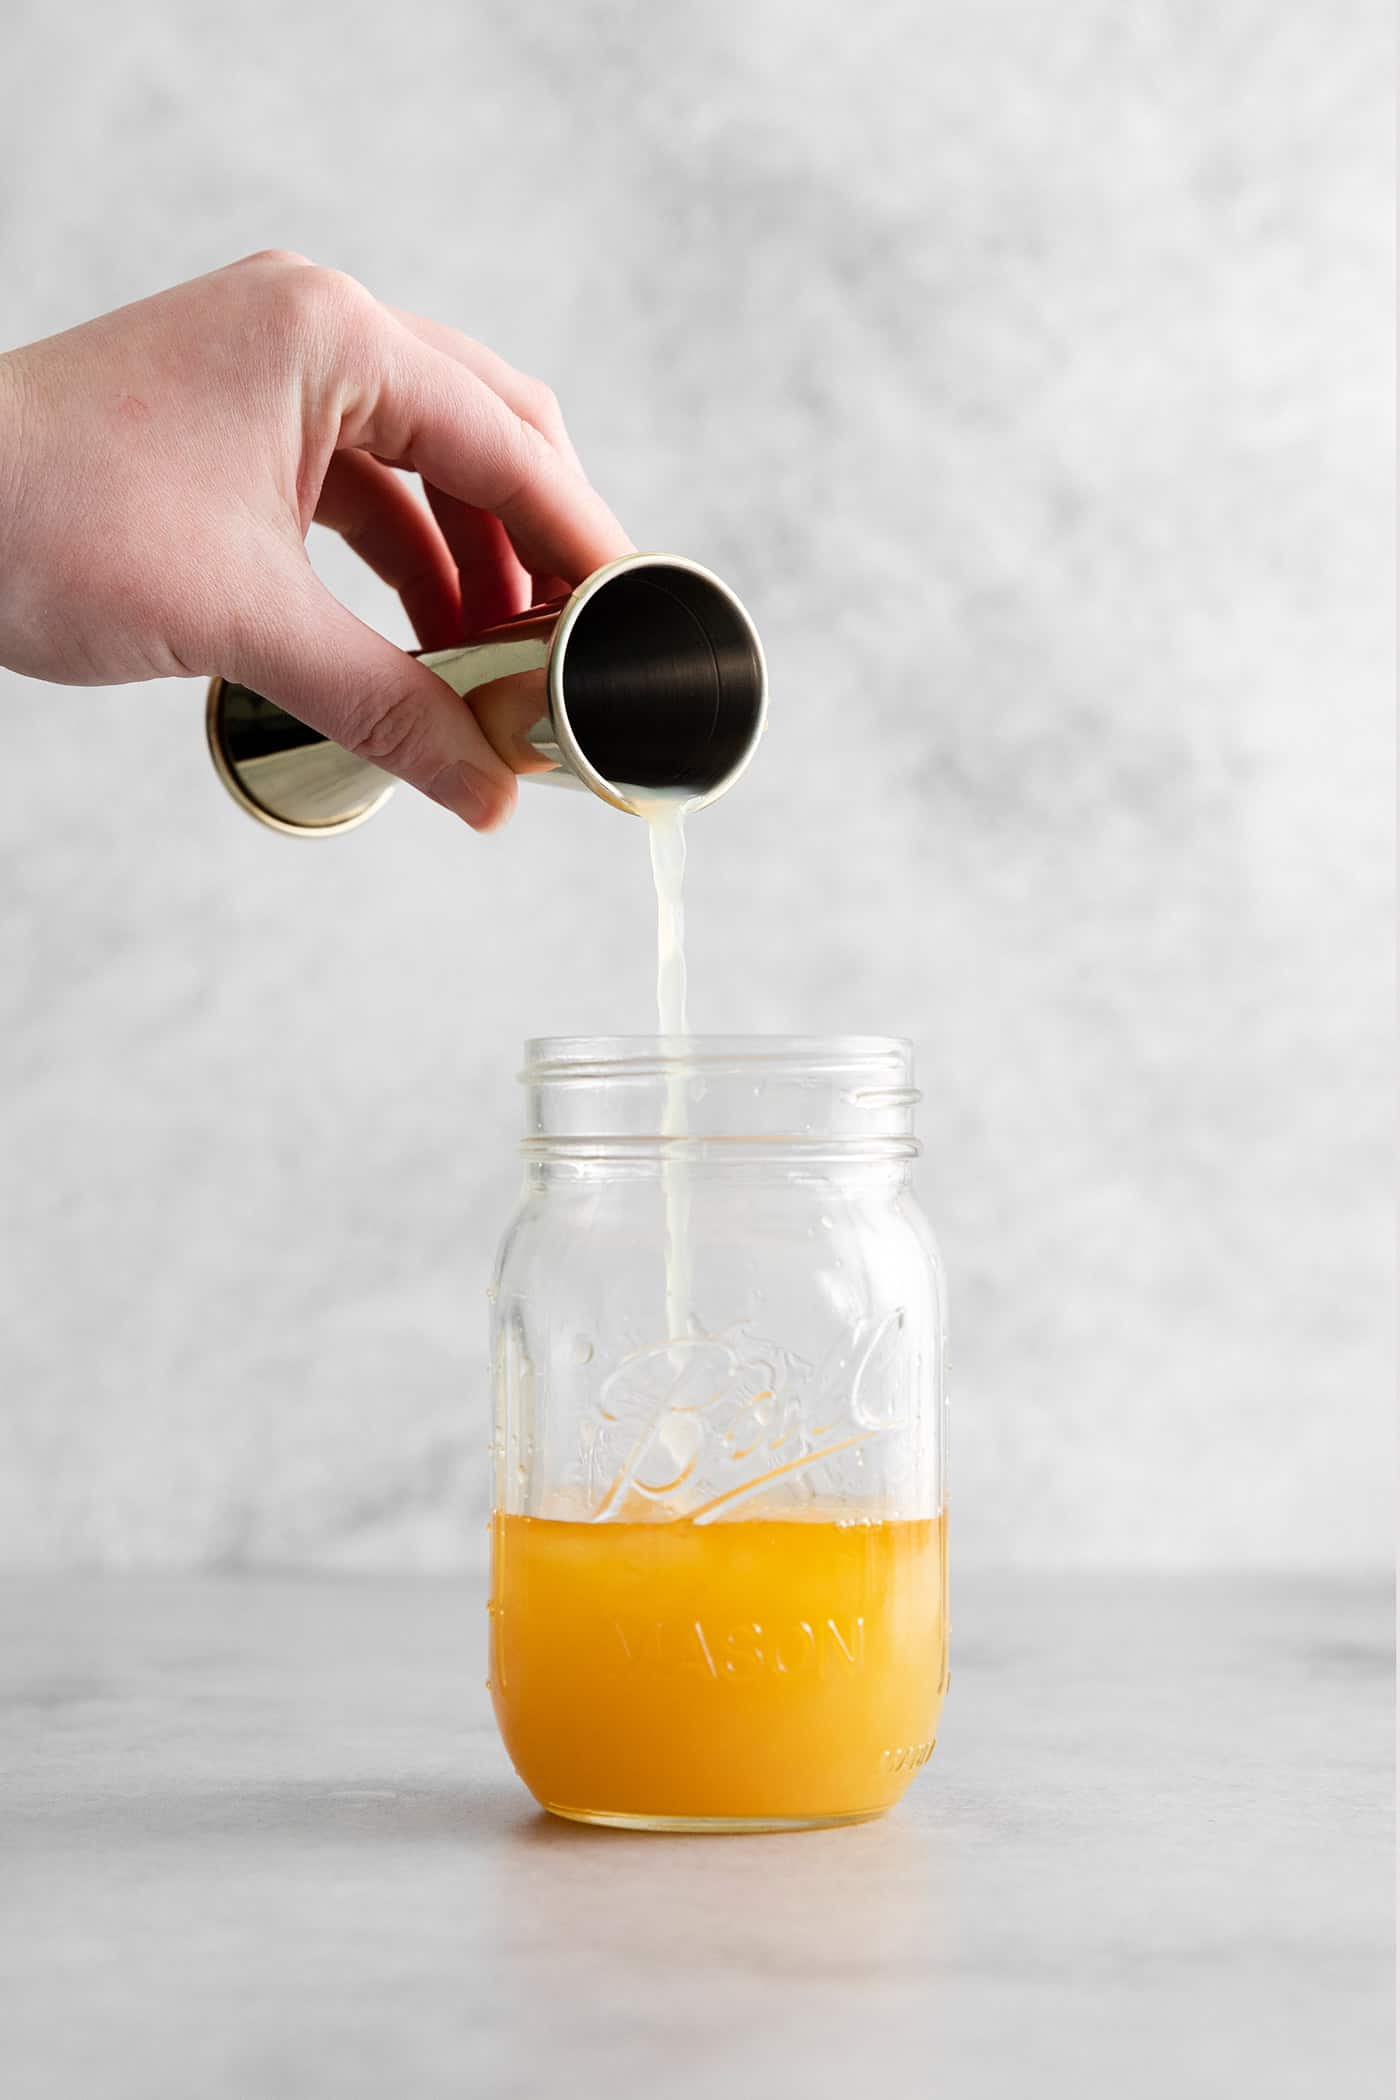 A hand pouring bourbon into a mason jar